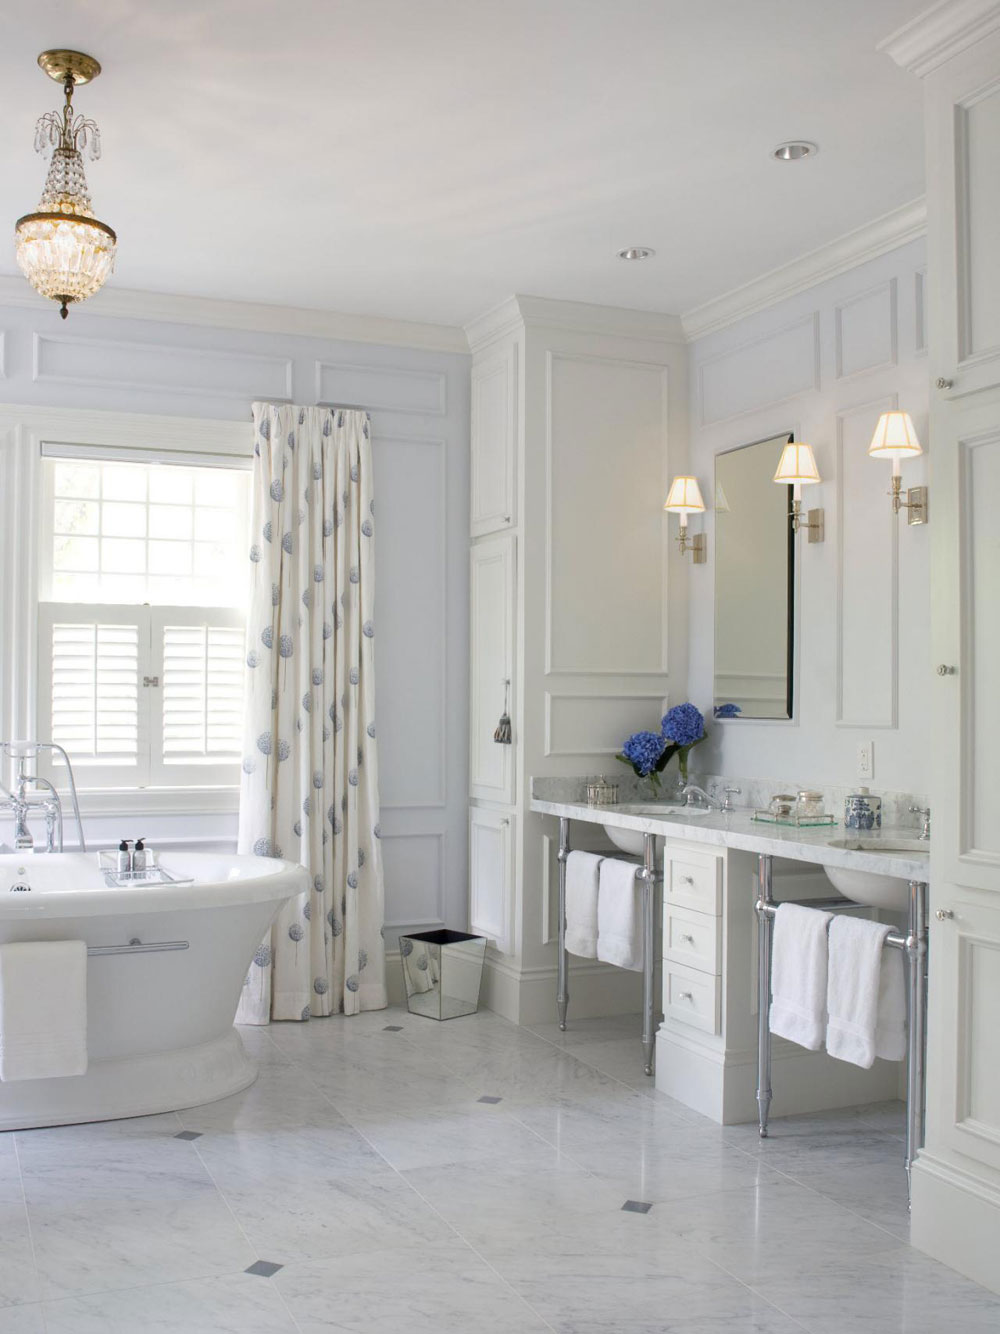 Creating a White Bathroom Interior Design 1 Create a white bathroom interior design